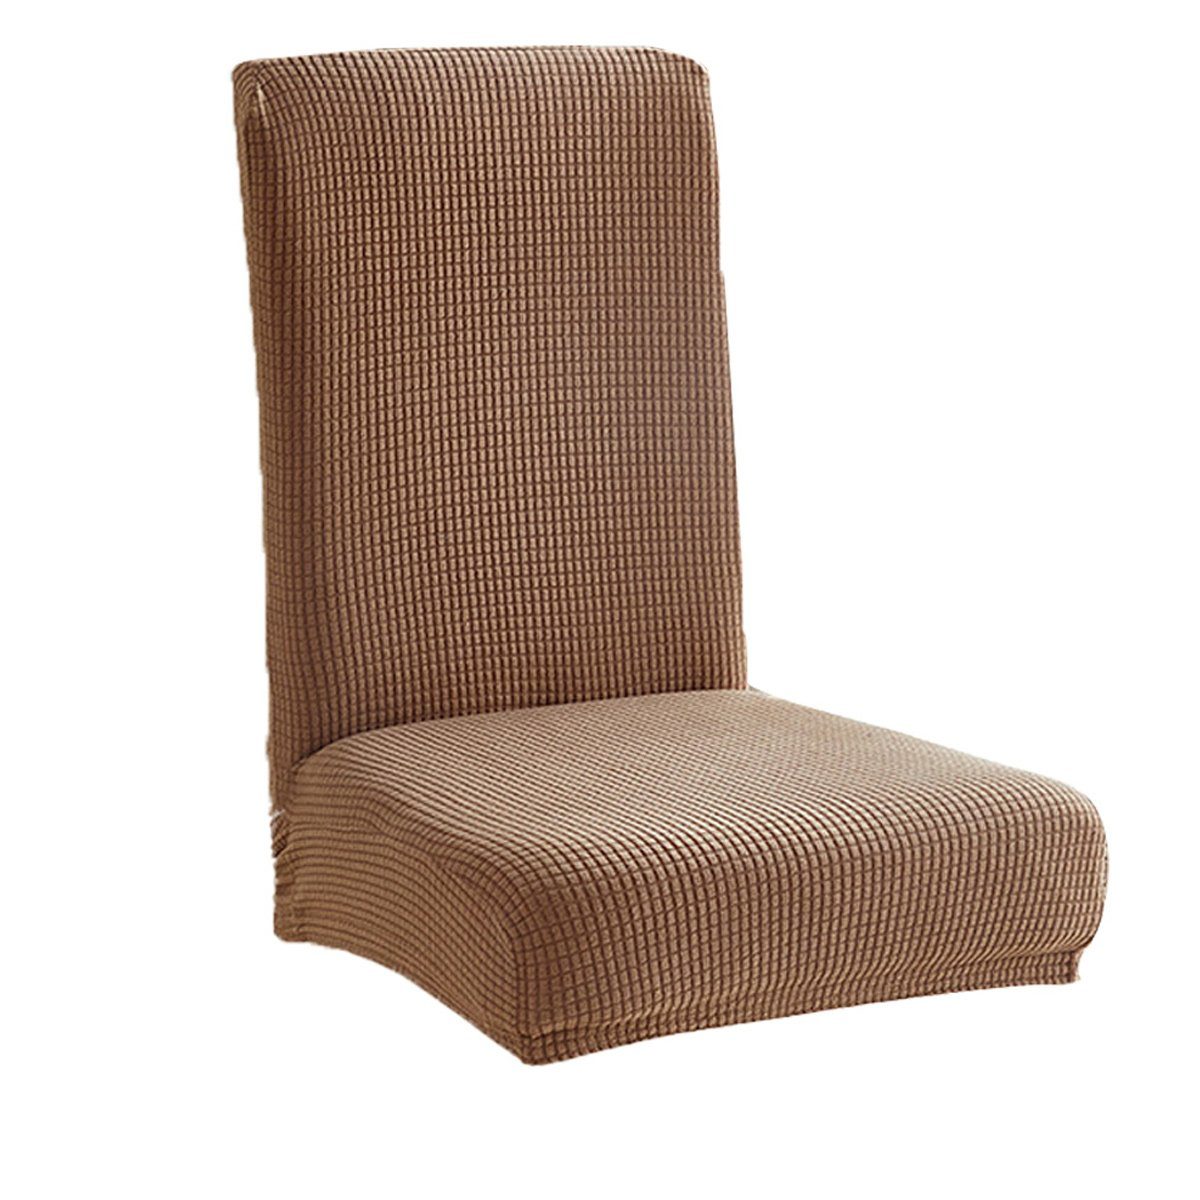 Stuhlbezug Stretch Abnehmbare Waschbar Stuhlbezug für Esszimmerstühle, Juoungle